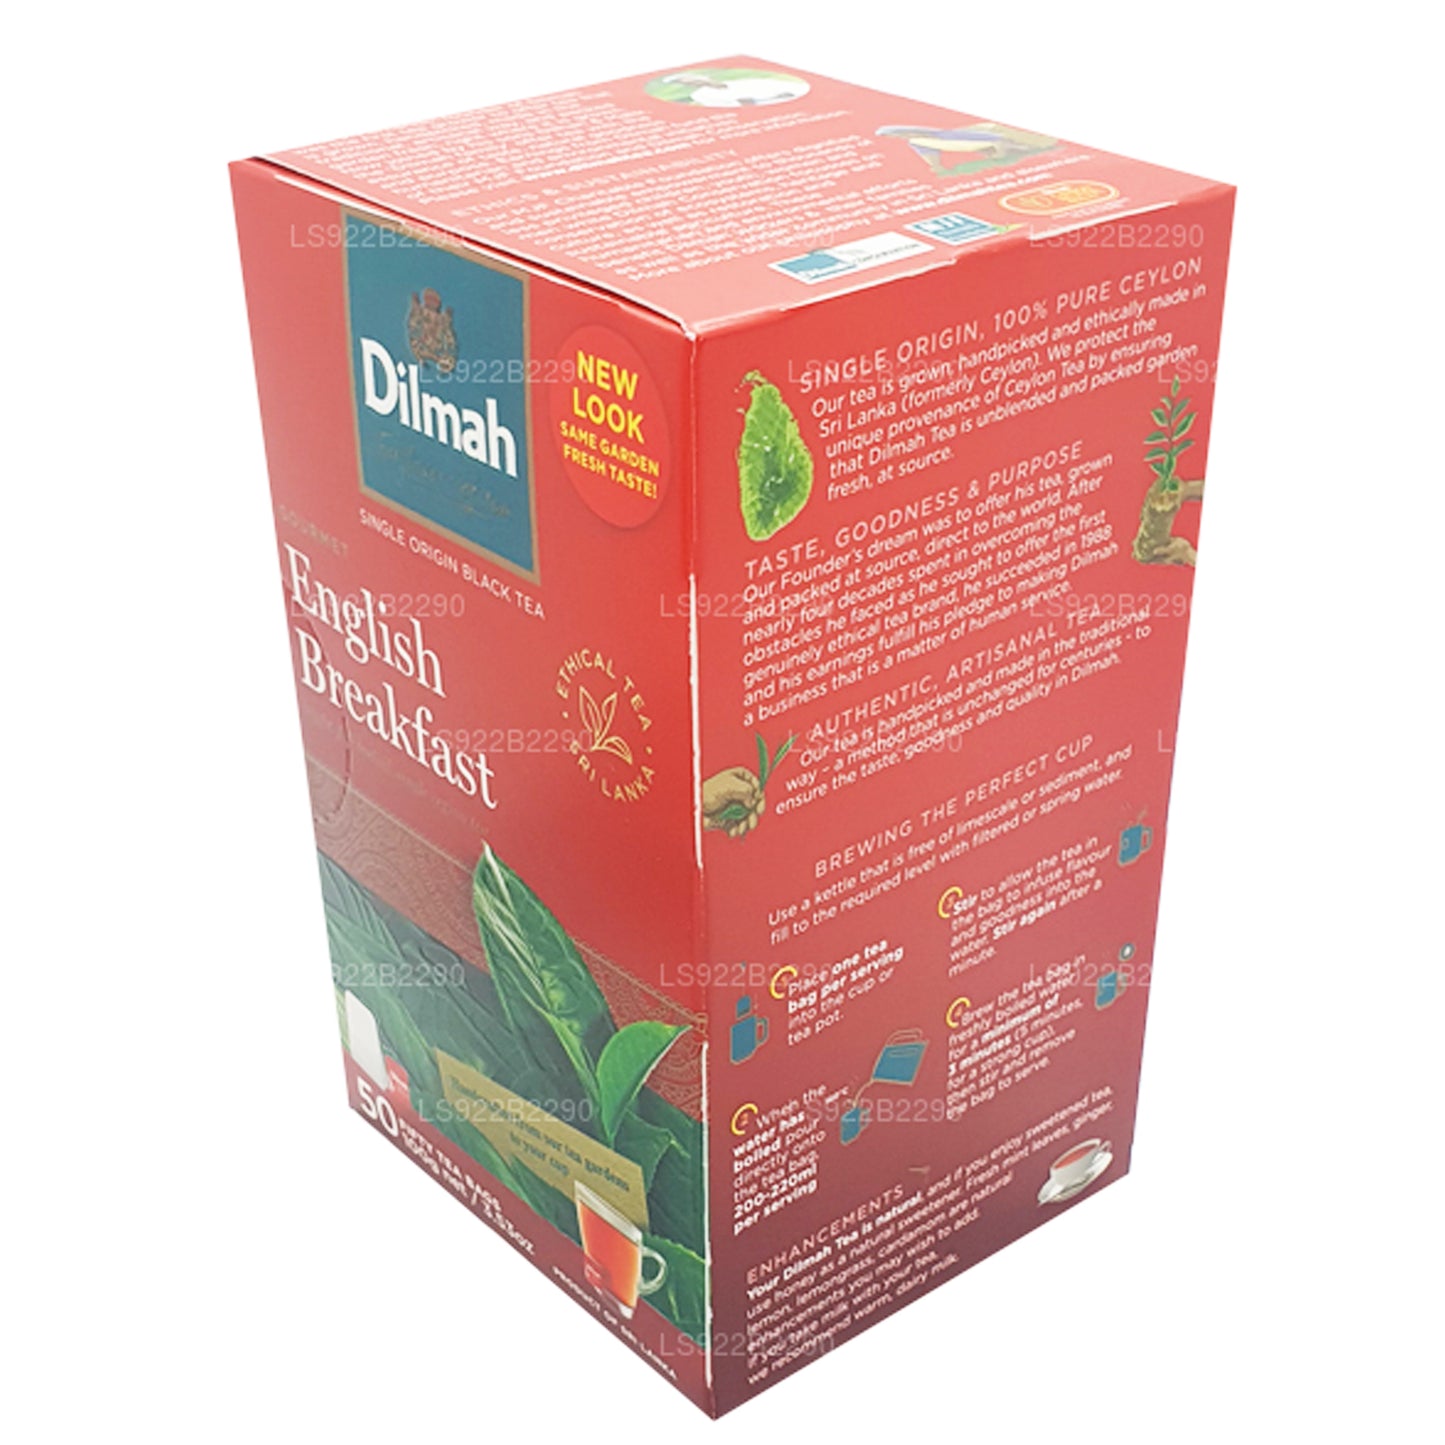 Té de desayuno inglés Dilmah, 50 bolsitas de té (100 g)